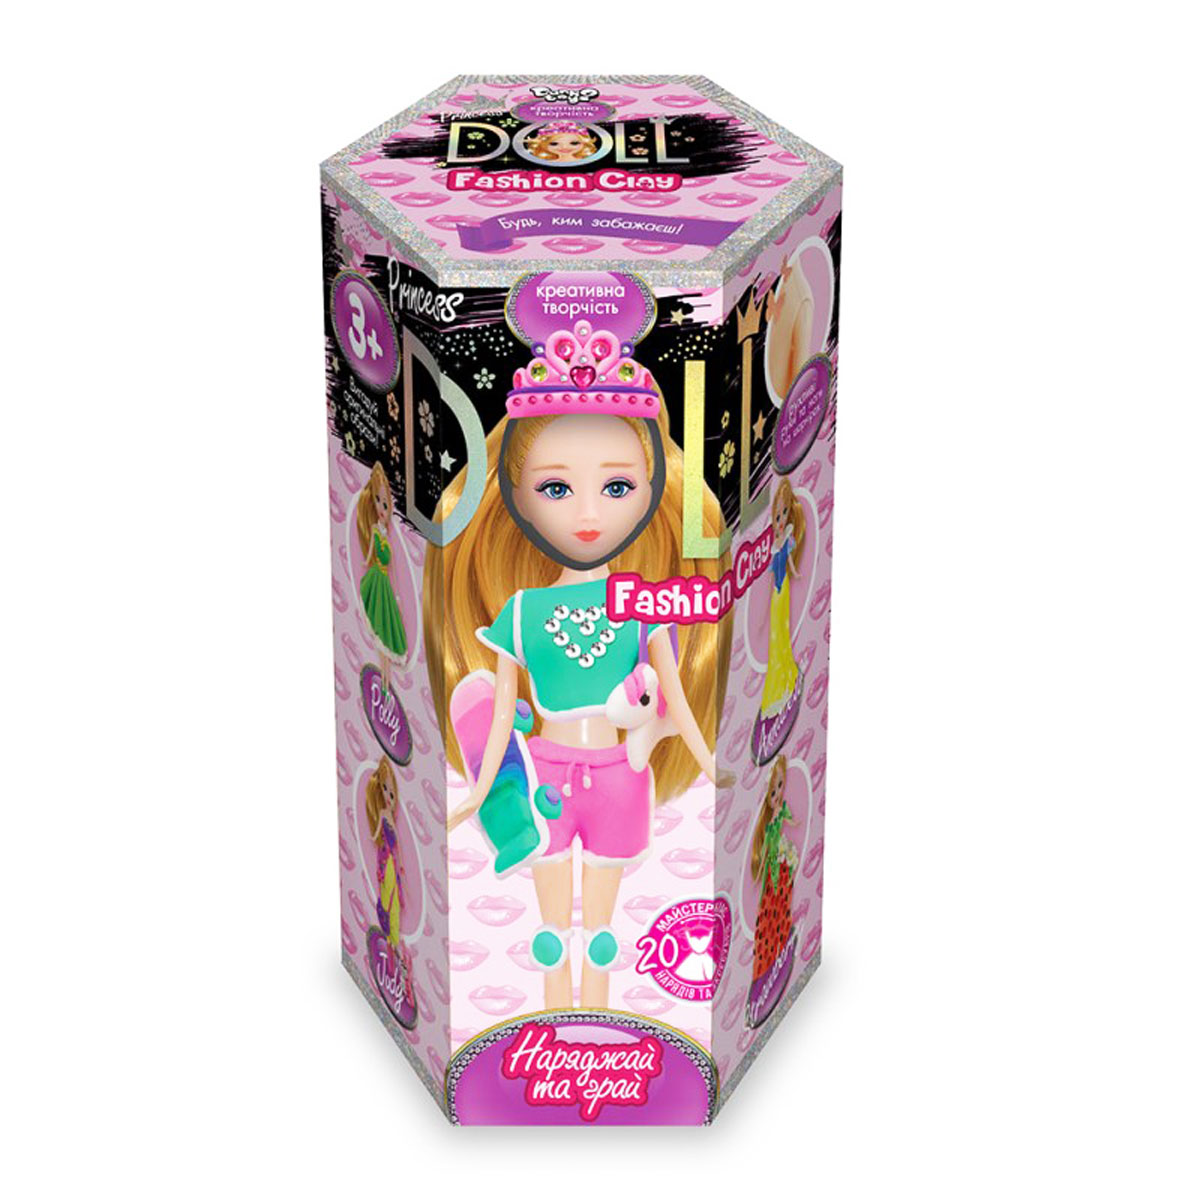 Набор для креативного творчества 'Princess doll' пластилин украинский язык